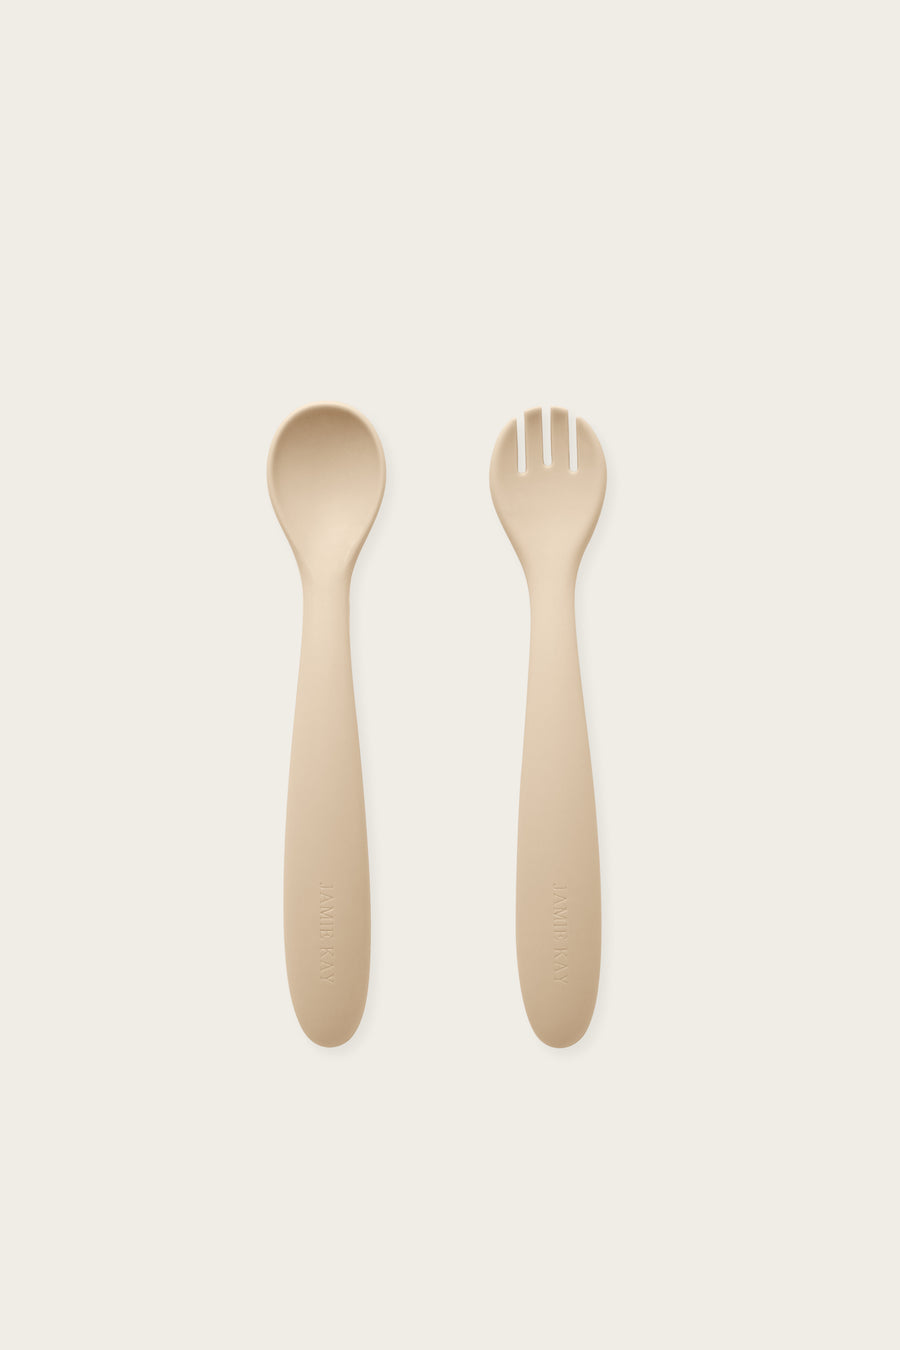 Spoon + Fork Set | Biscotti